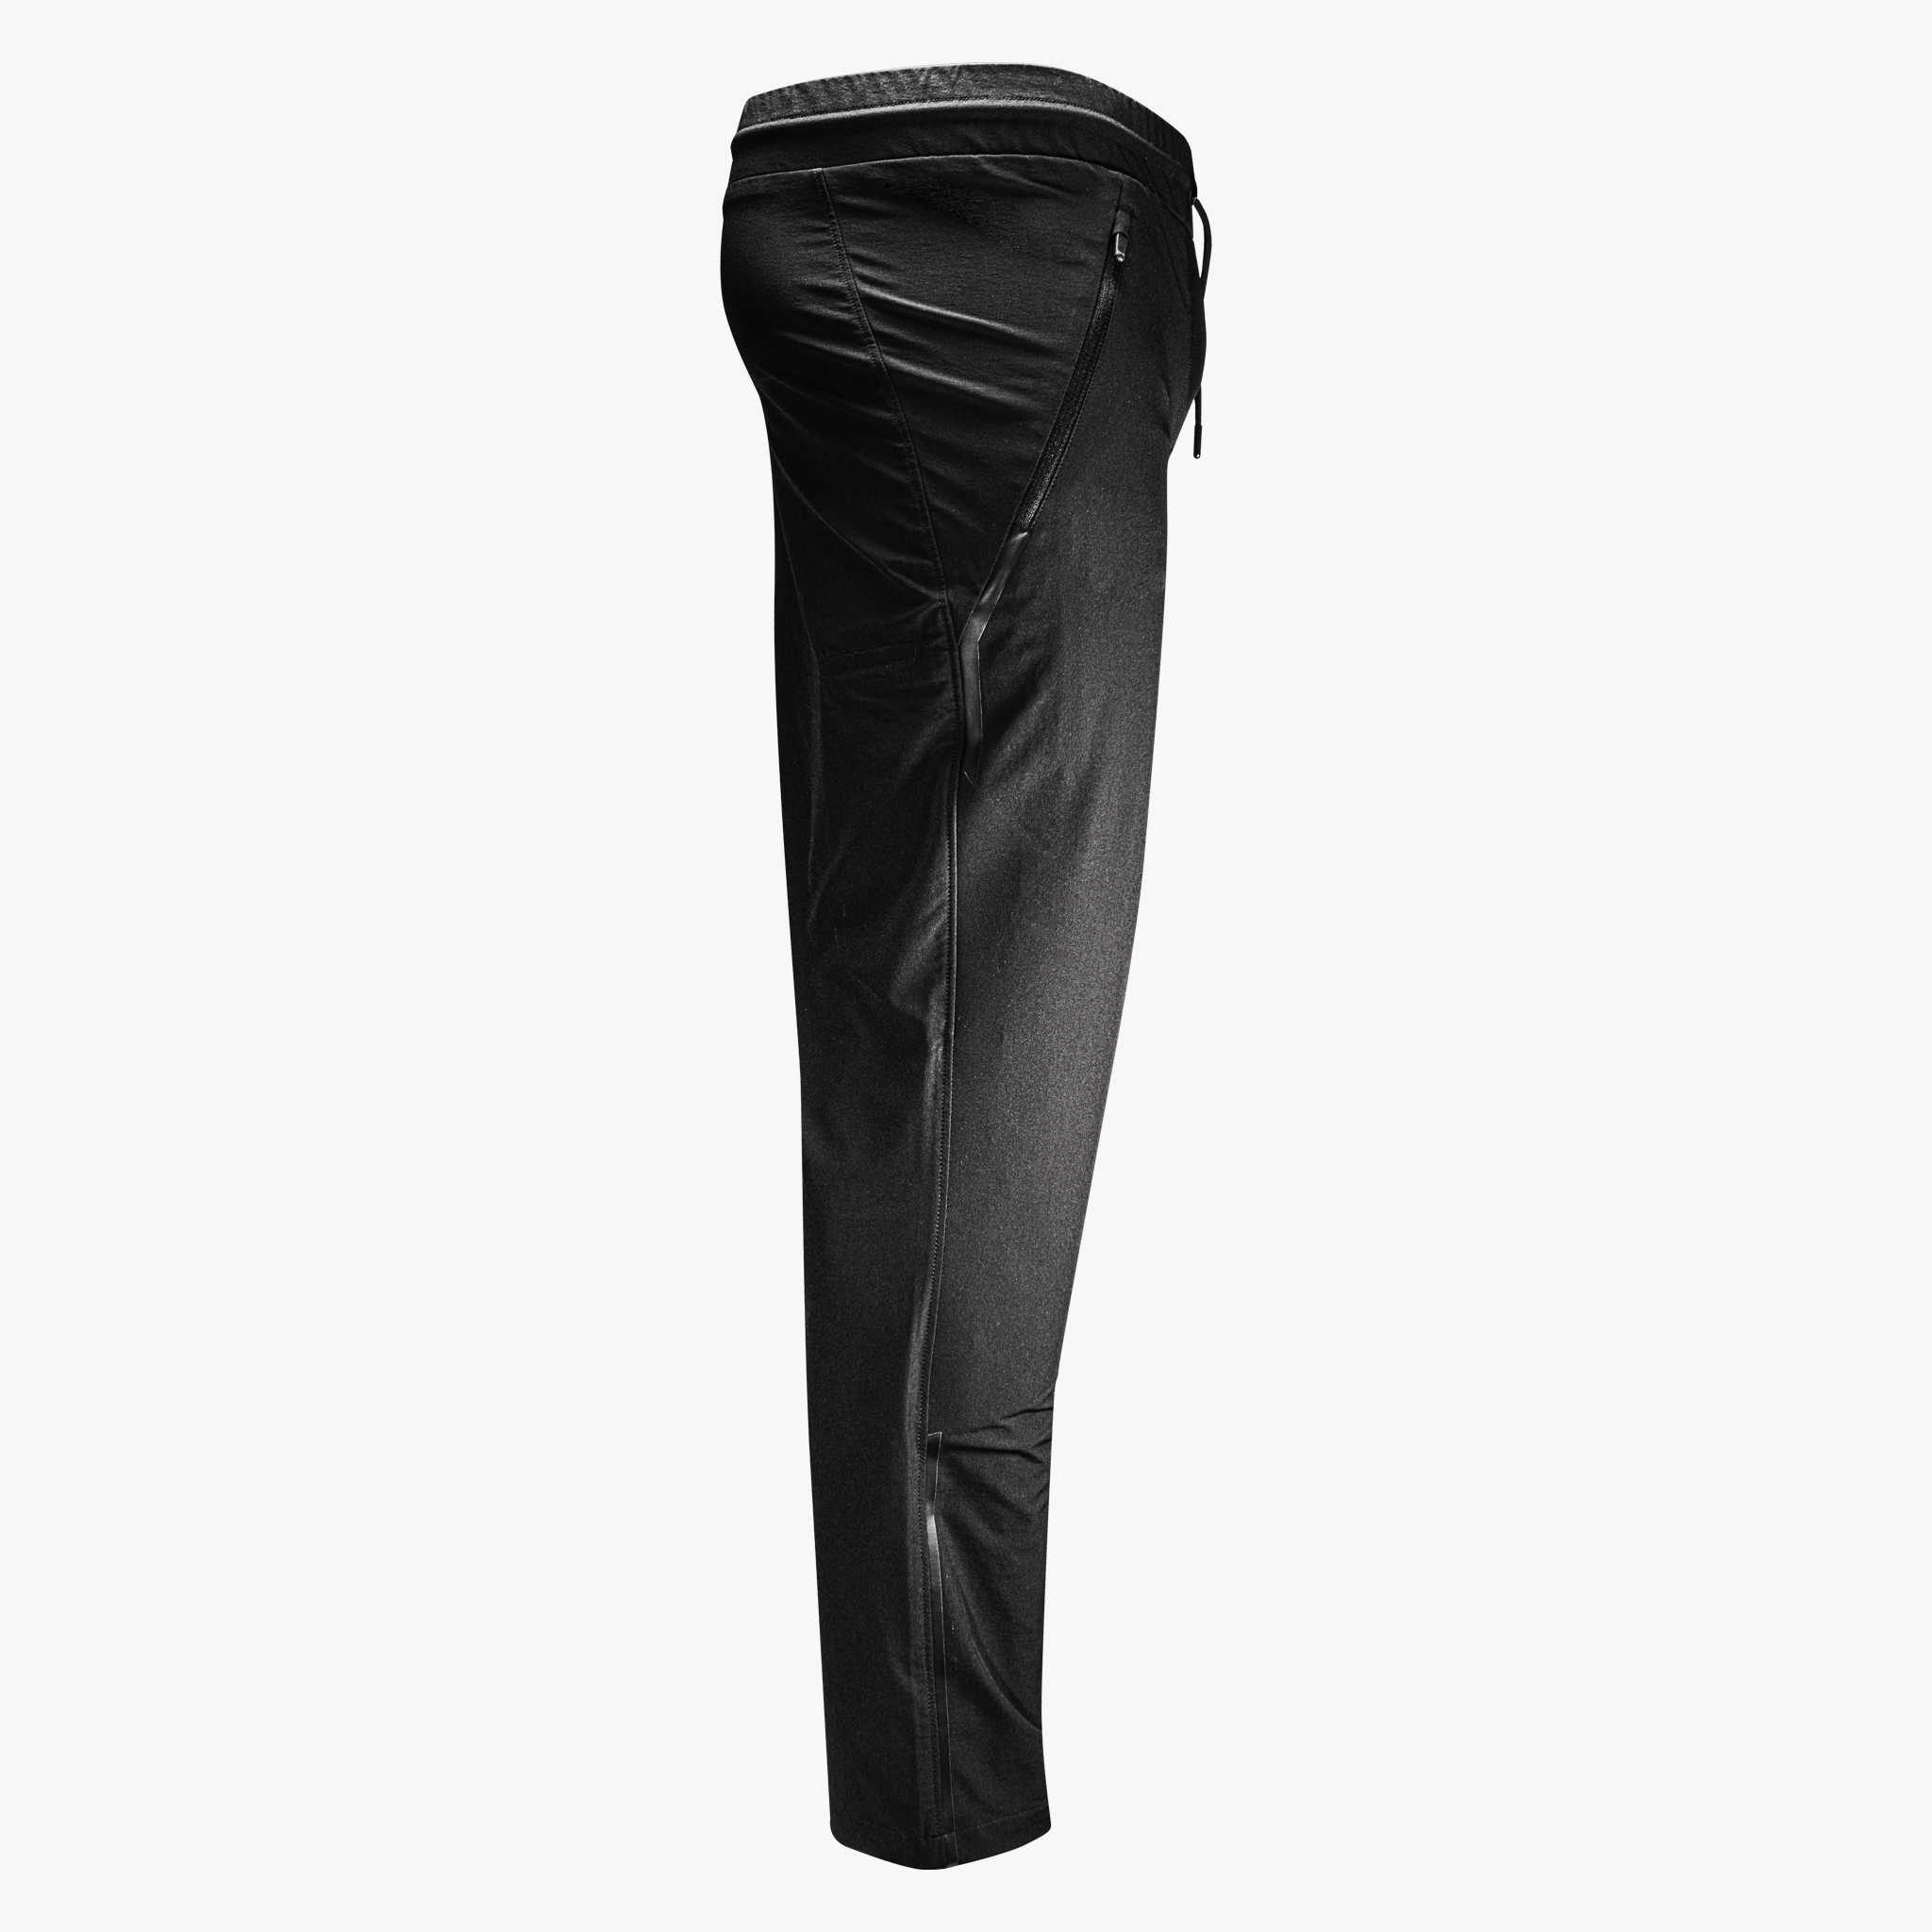 Carbon CC Paintball Pants - Black - XXL